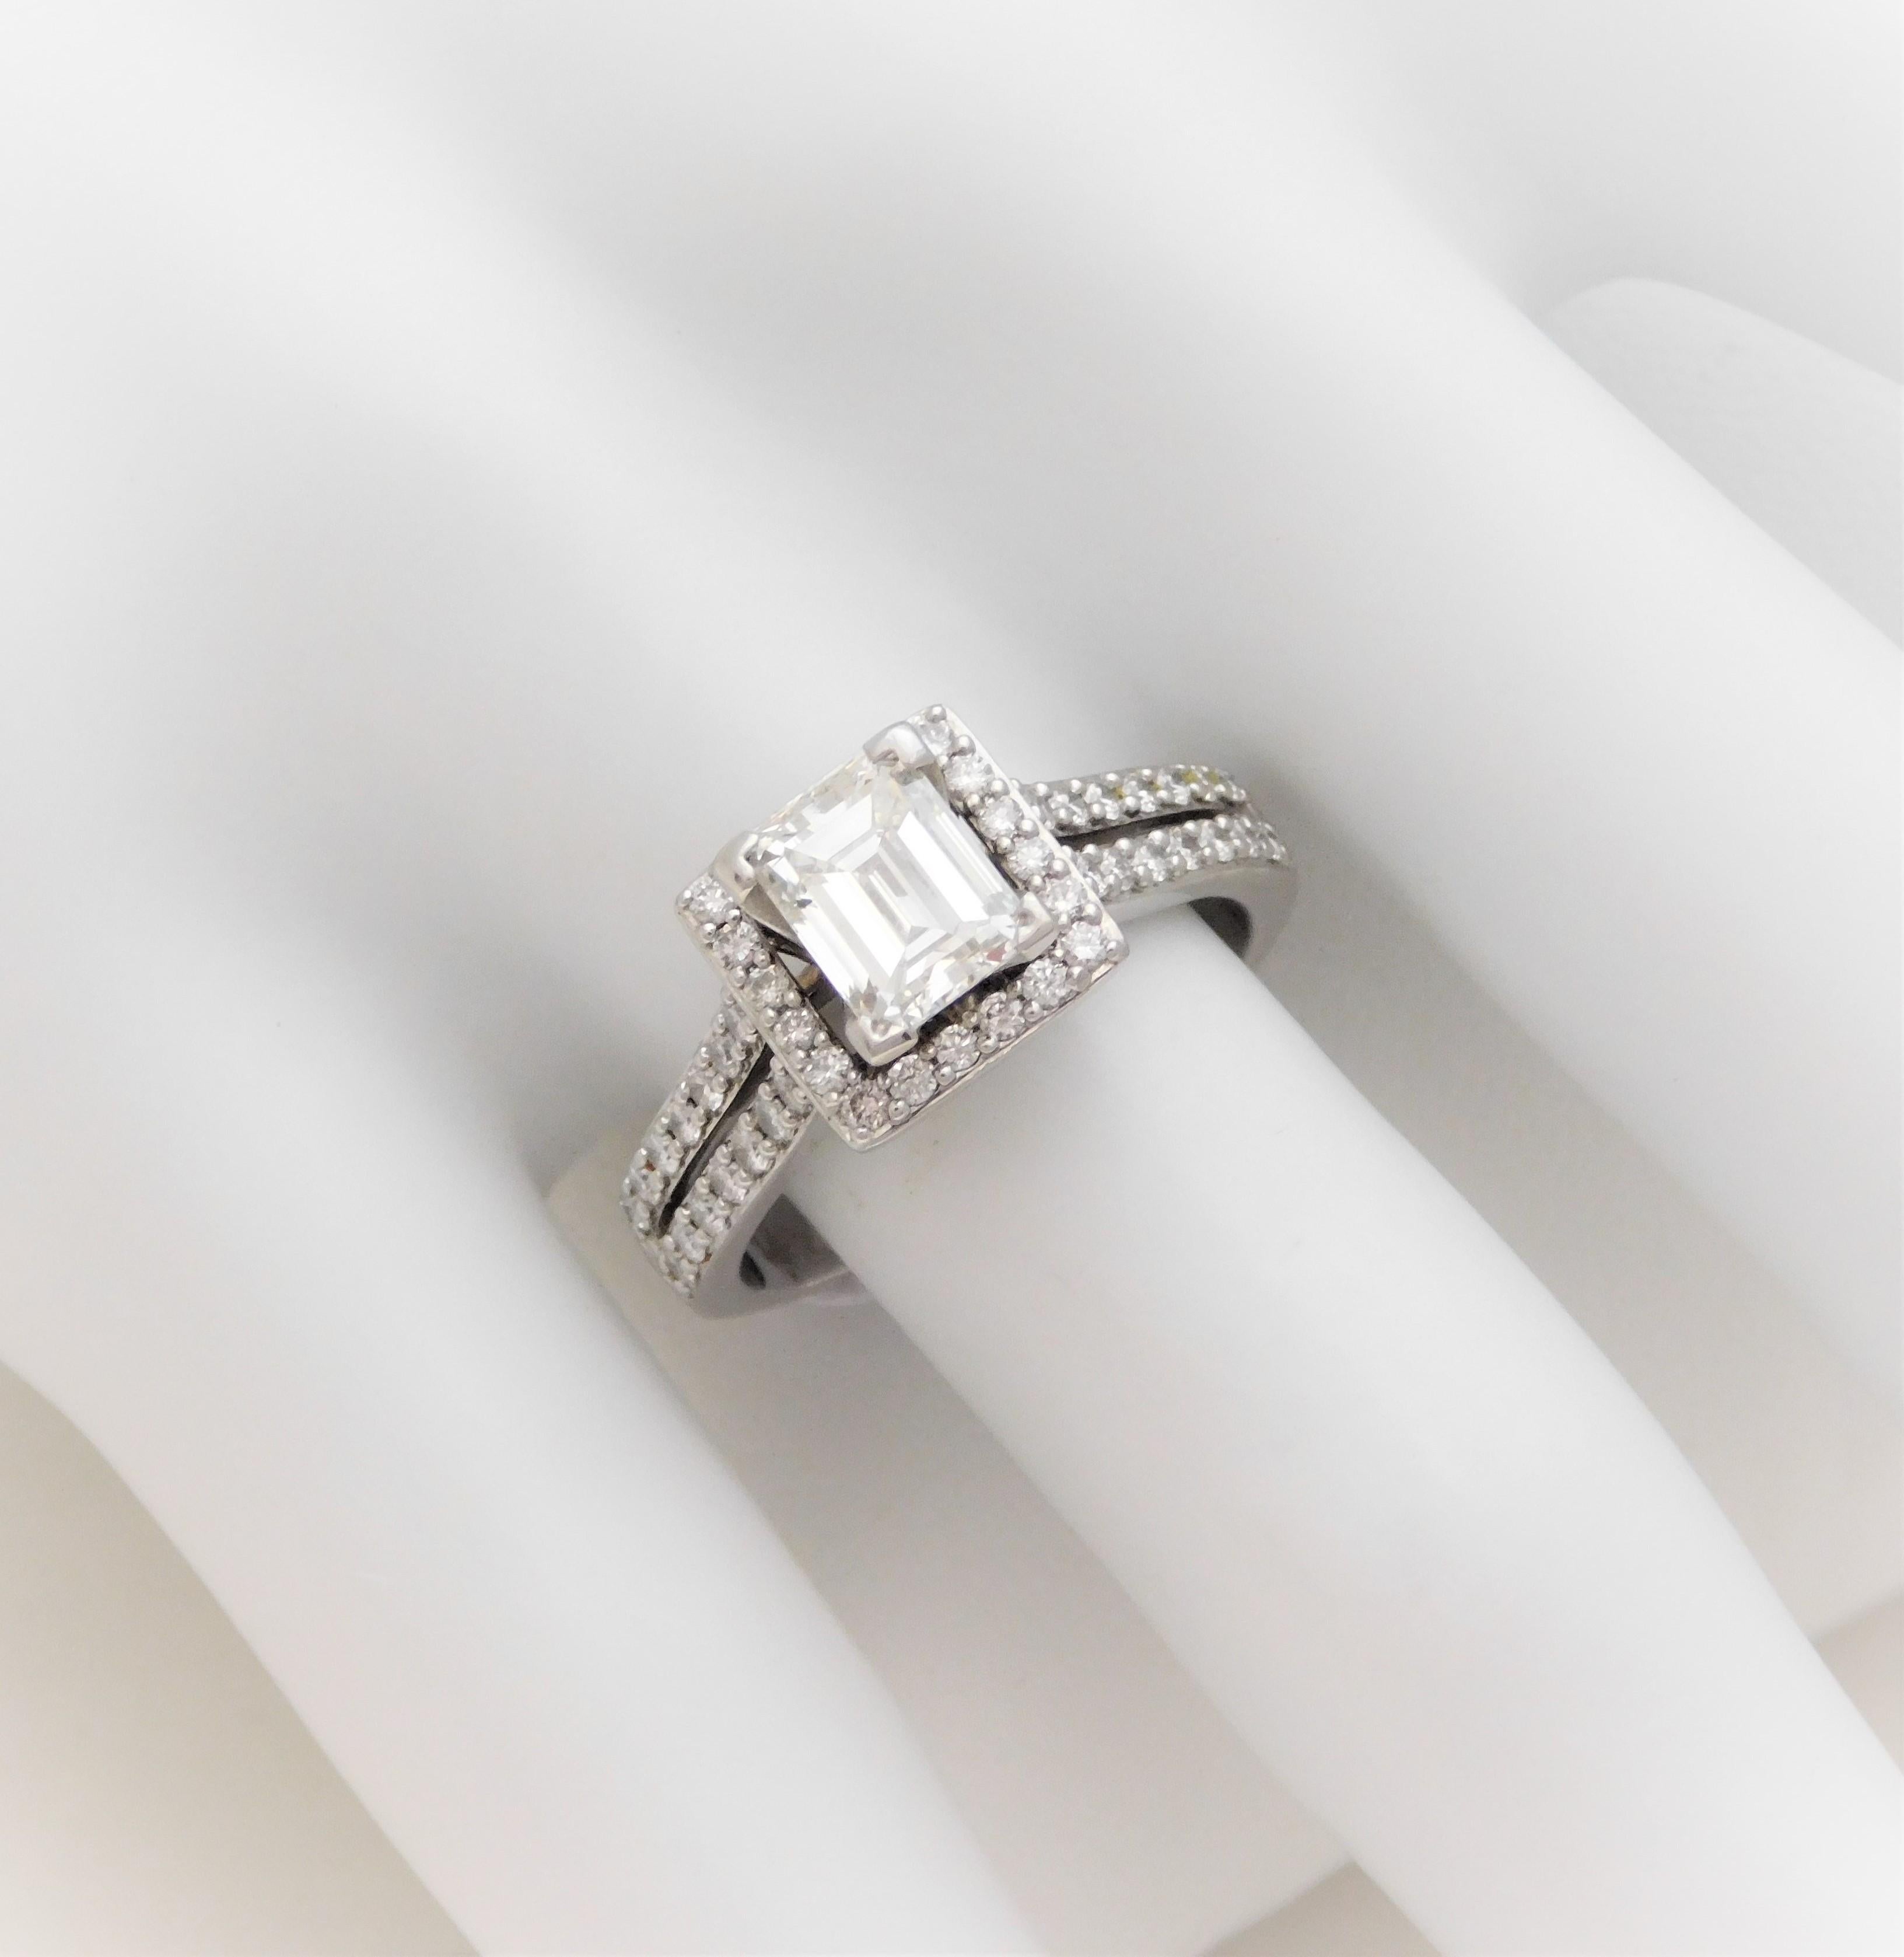 UGS Certified 2.18 Carat Emerald Cut Diamond Engagement Ring 12